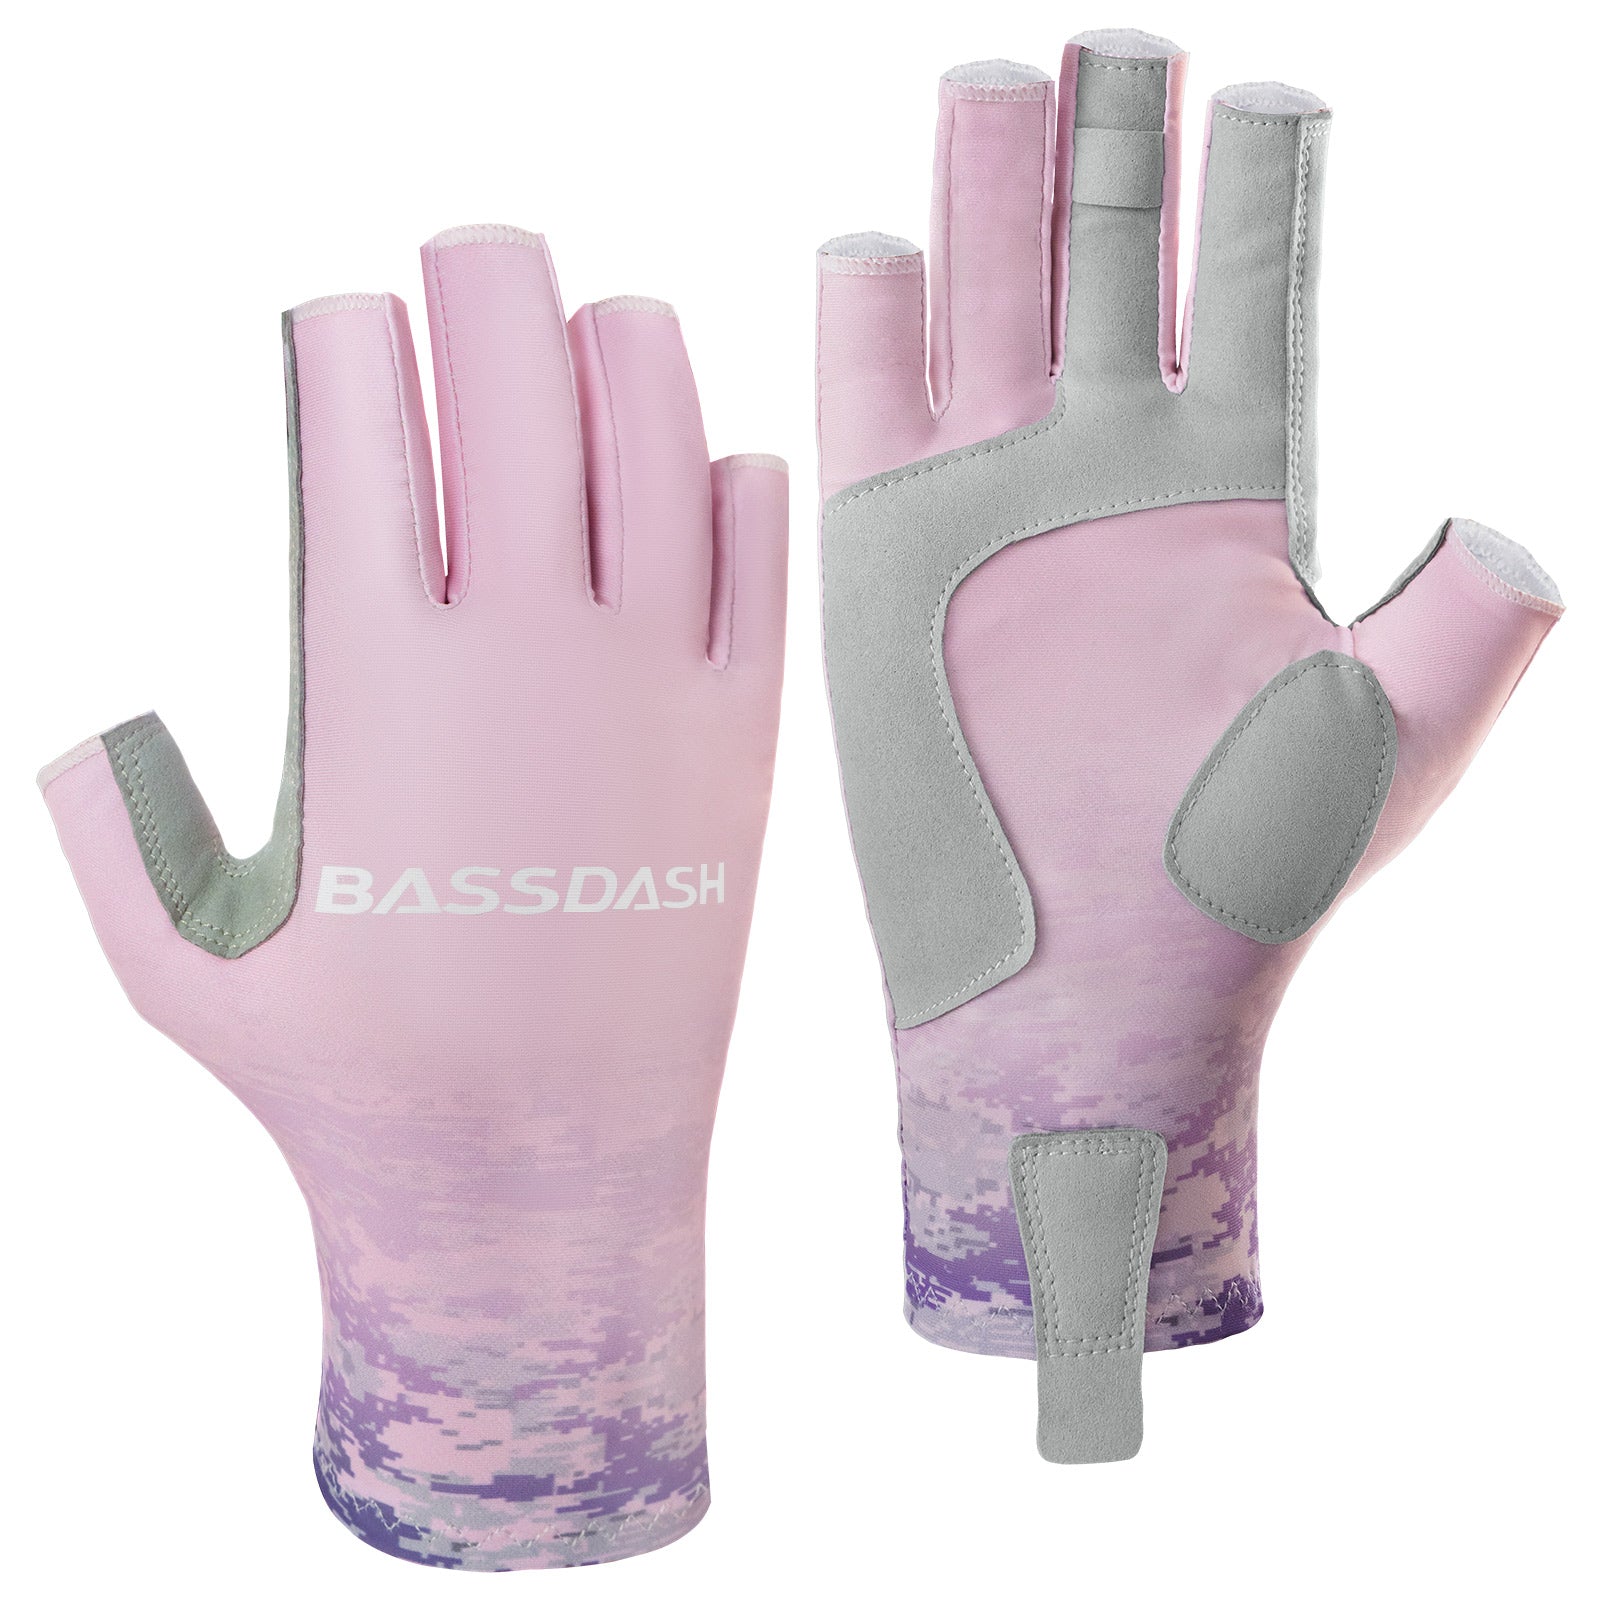 wholesale upf50+ fishing sun gloves quality